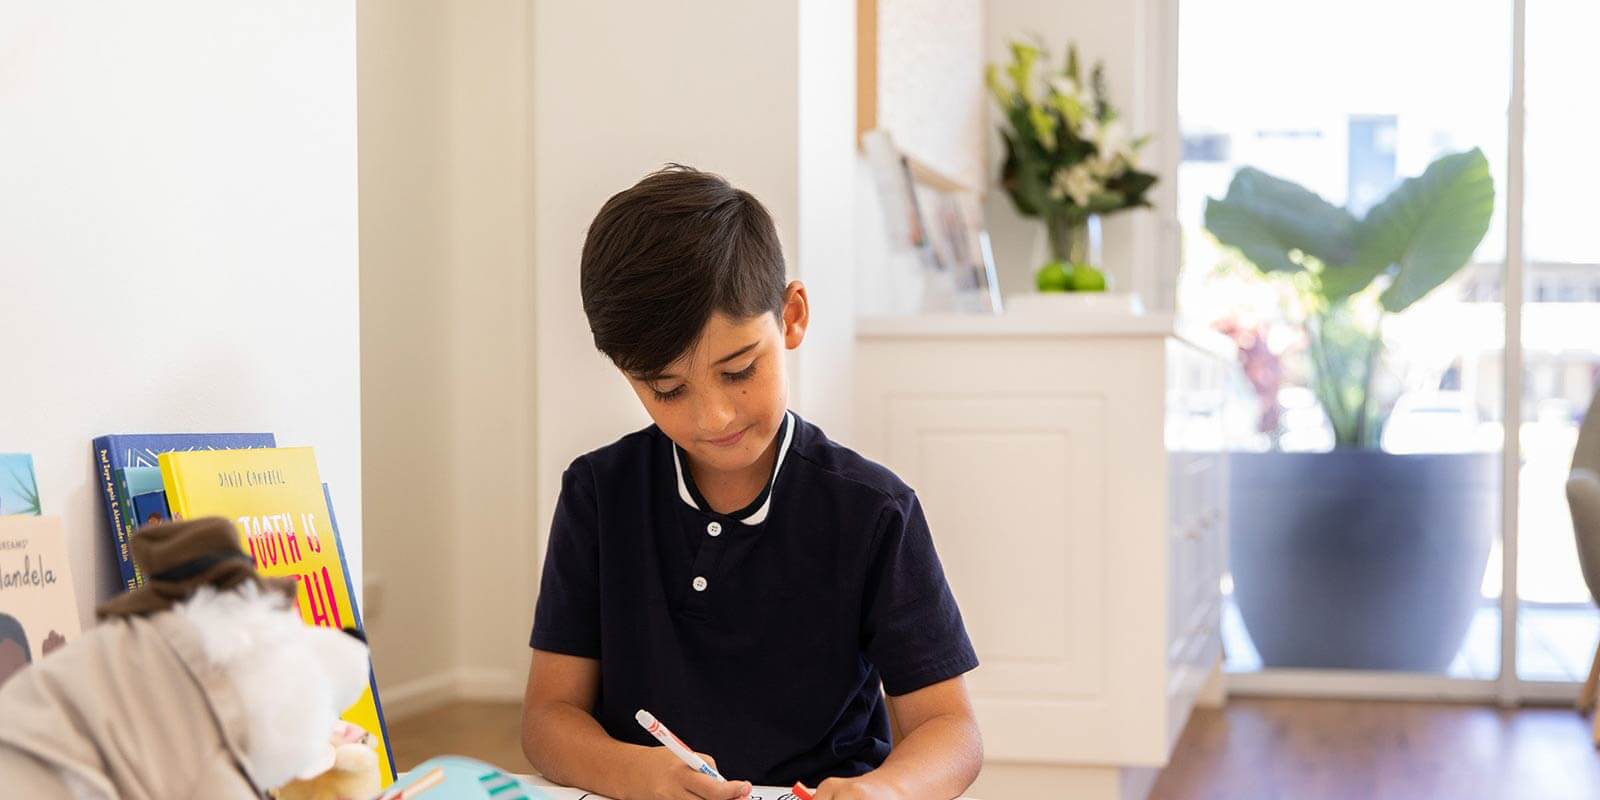 Young boy writing